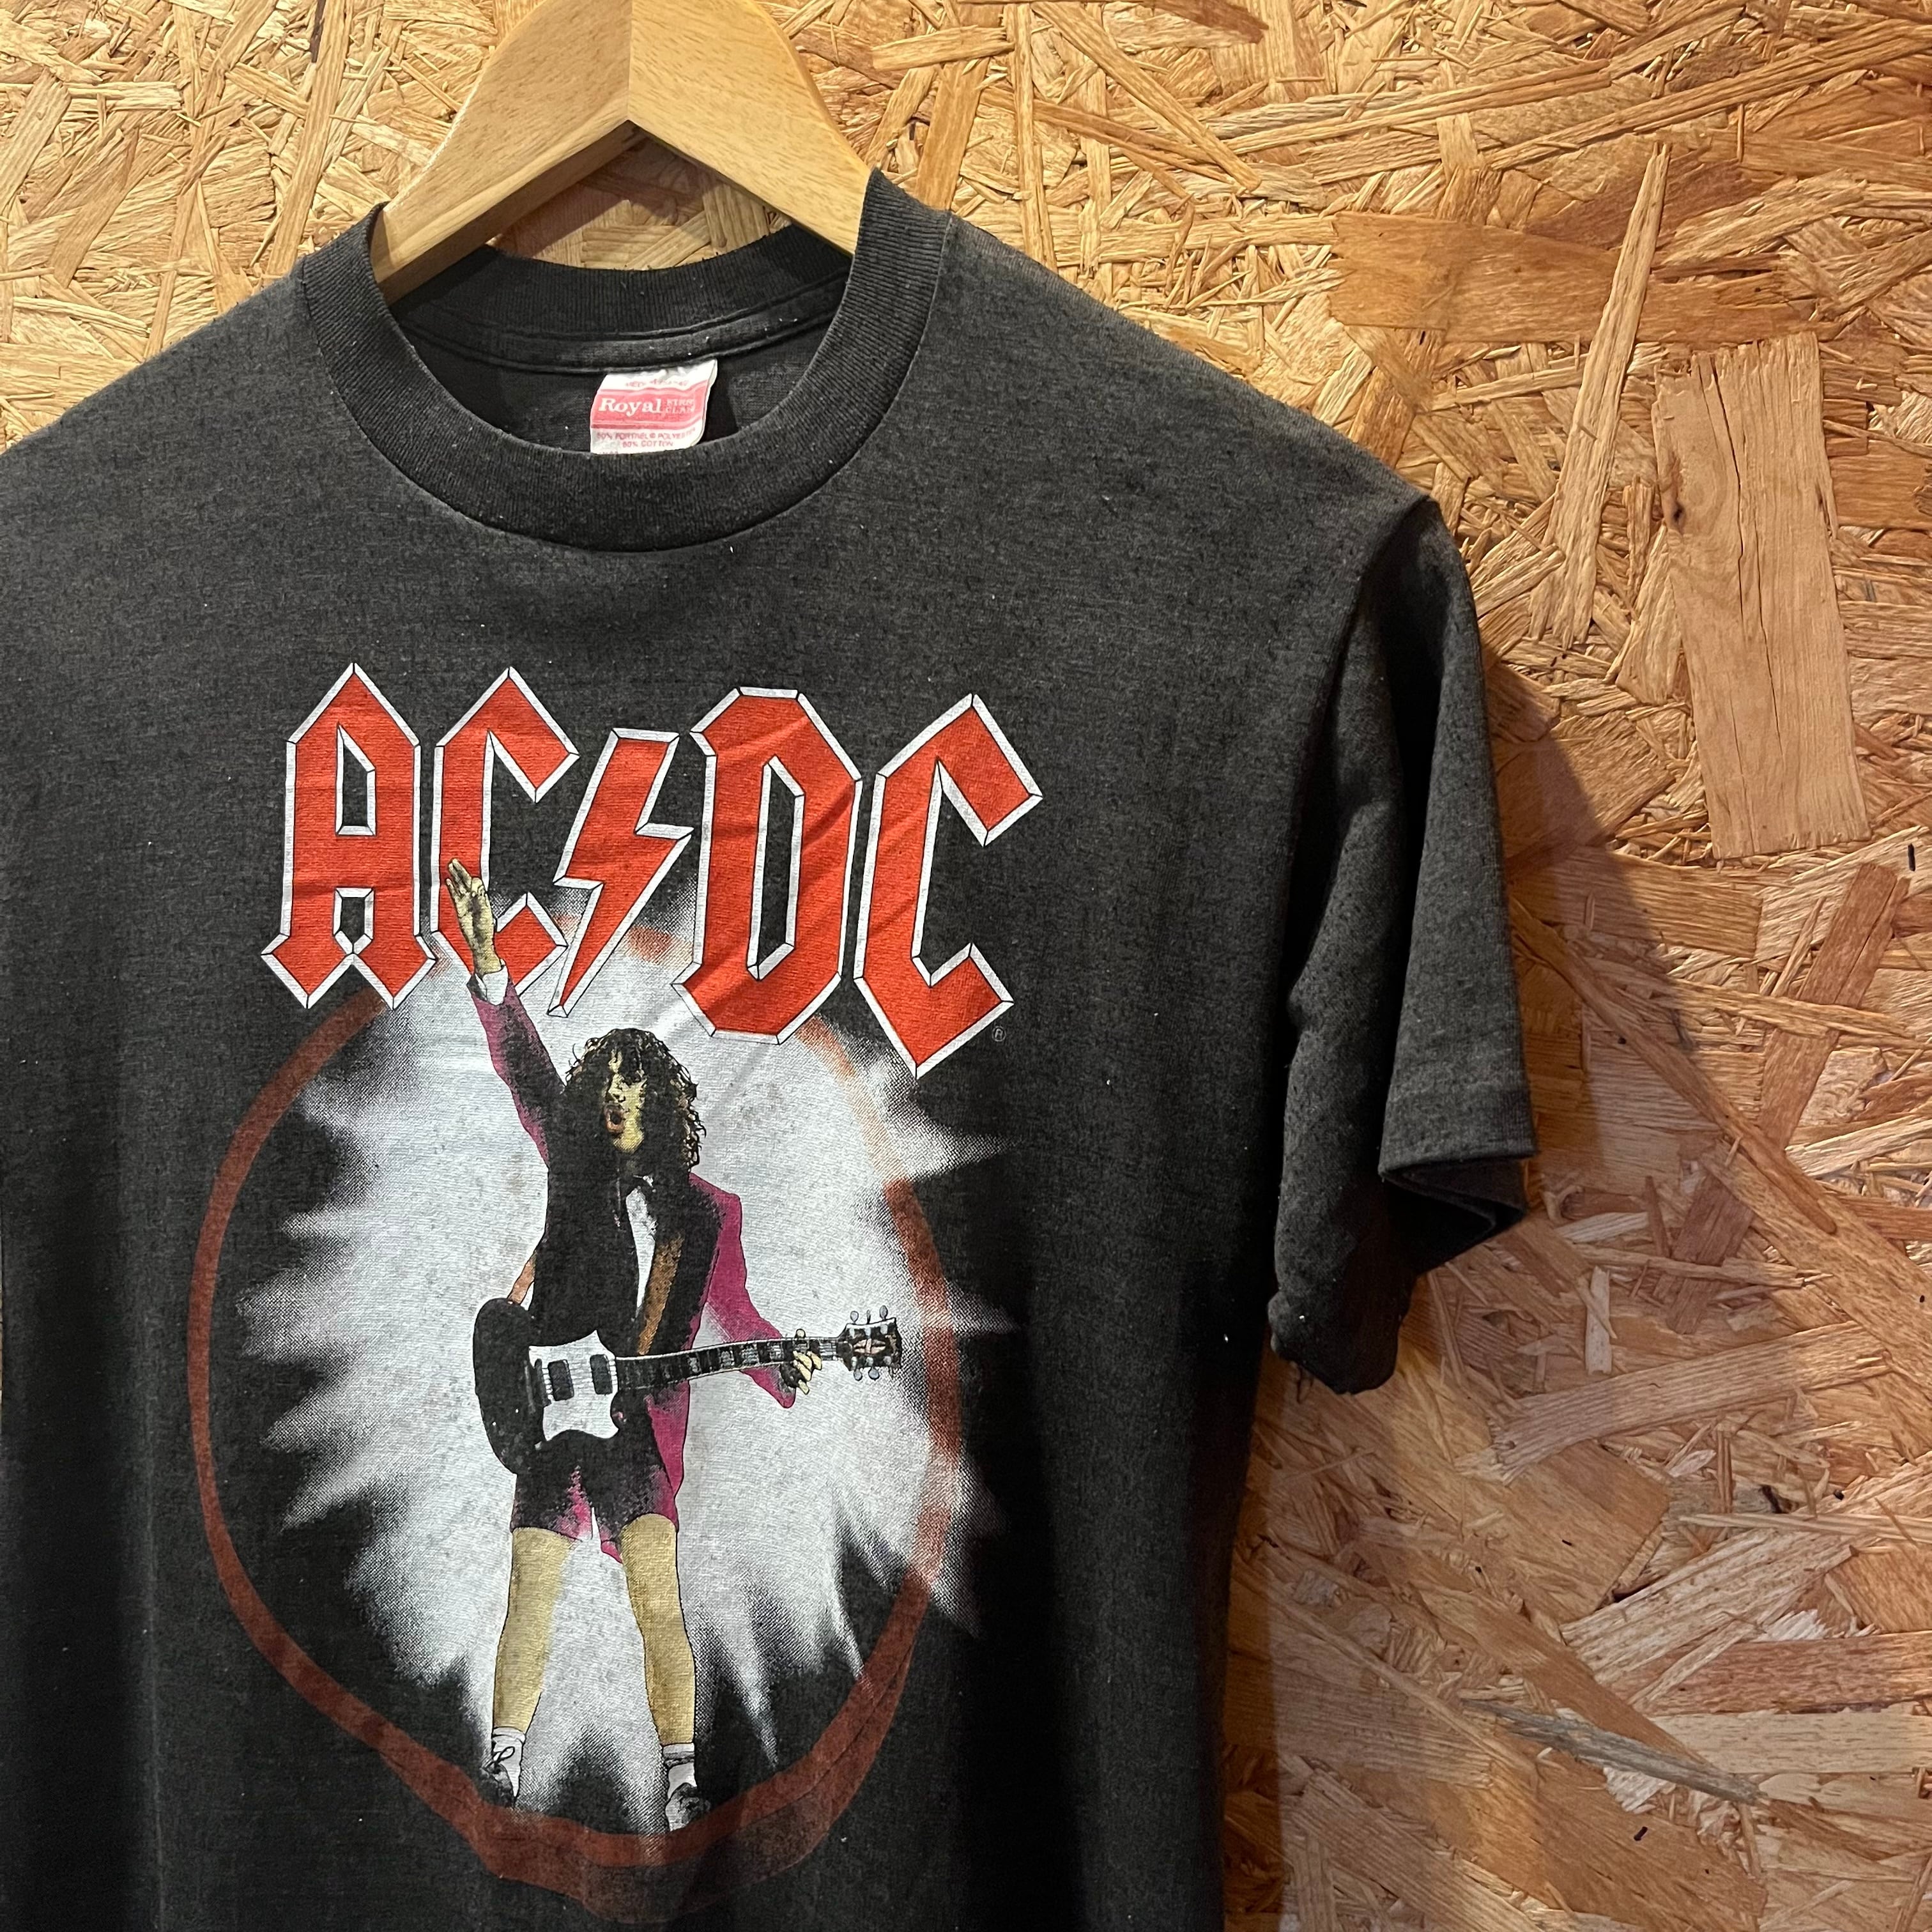 Tシャツ バンドT AC/DC